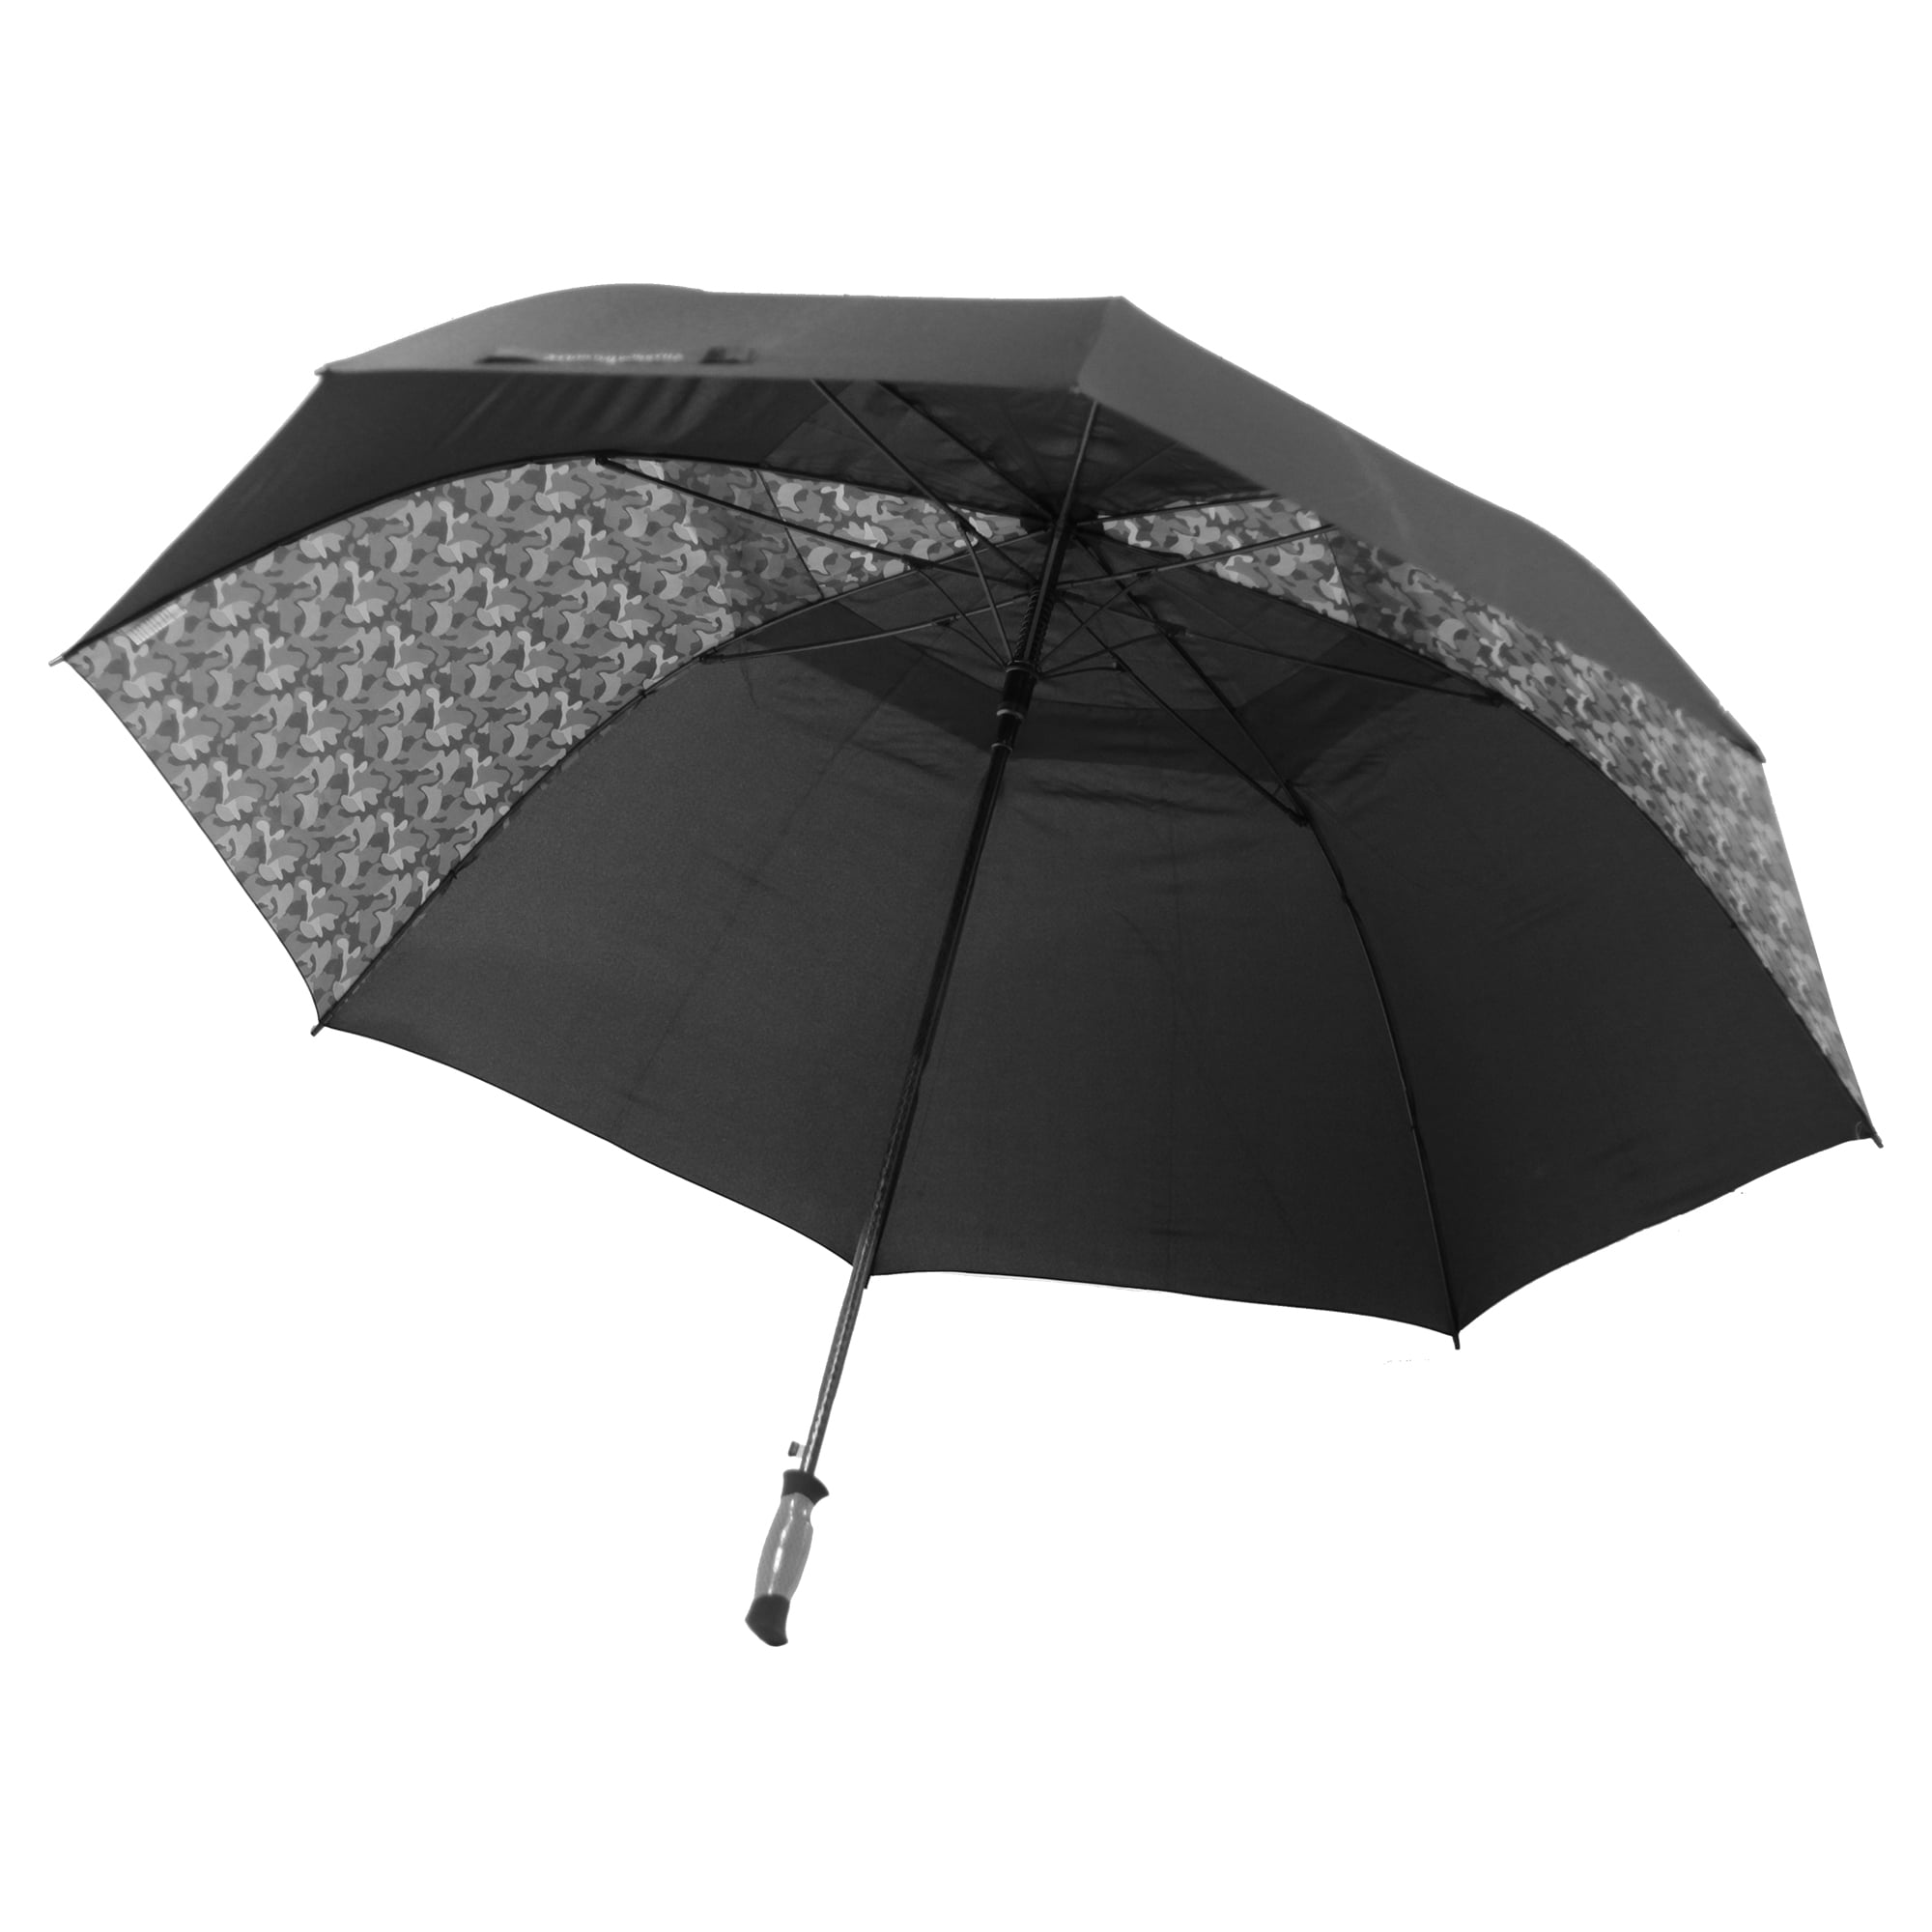 lightest golf umbrella